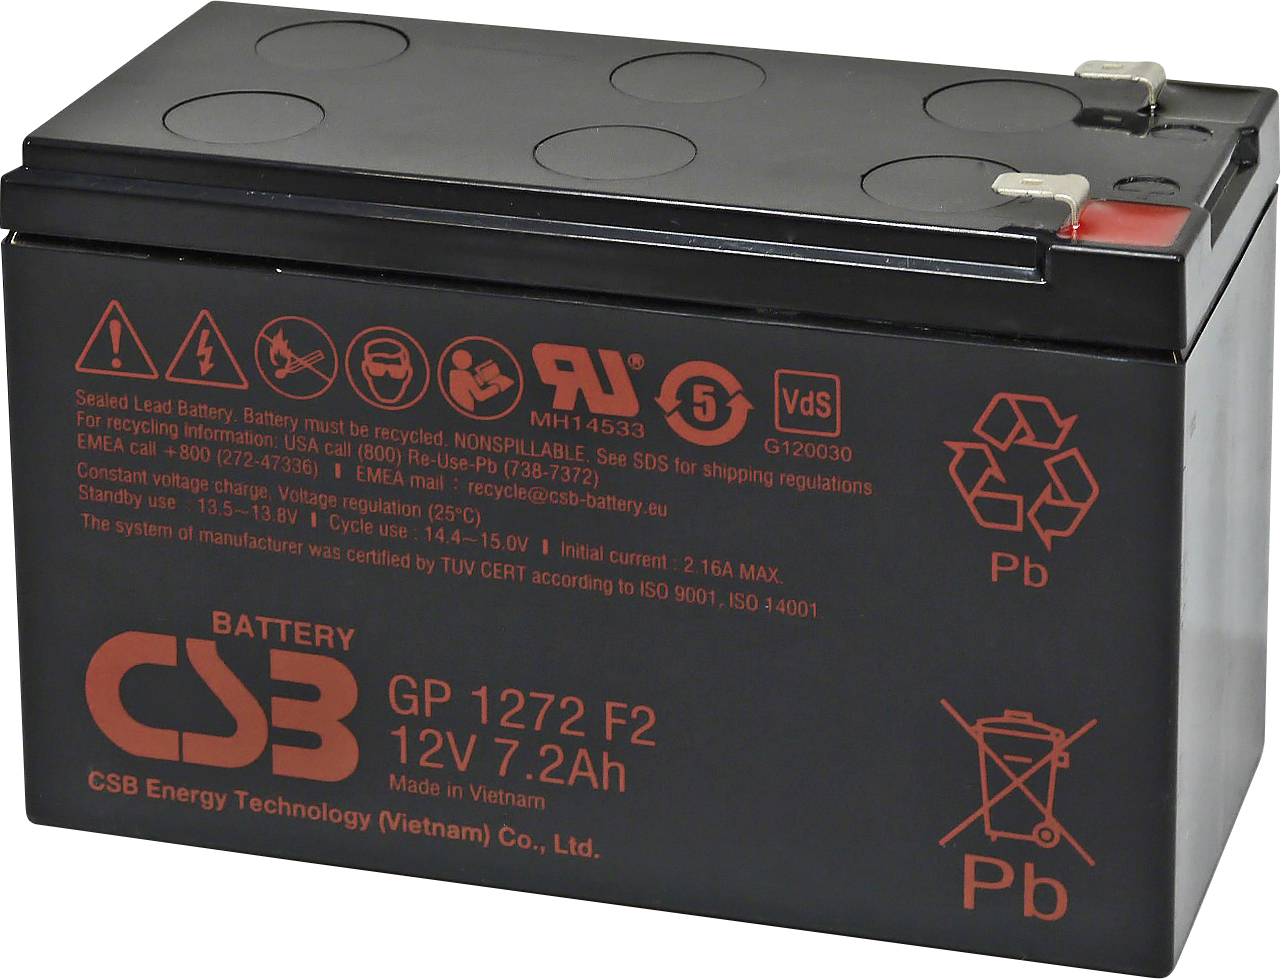 Csb battery. GP 1272 f2 12v 7.2Ah. CSB Battery co GP 1272 f2. CSB GP-1272 12v 7.2Ah клеммы f2. Батарея CSB gp1272.